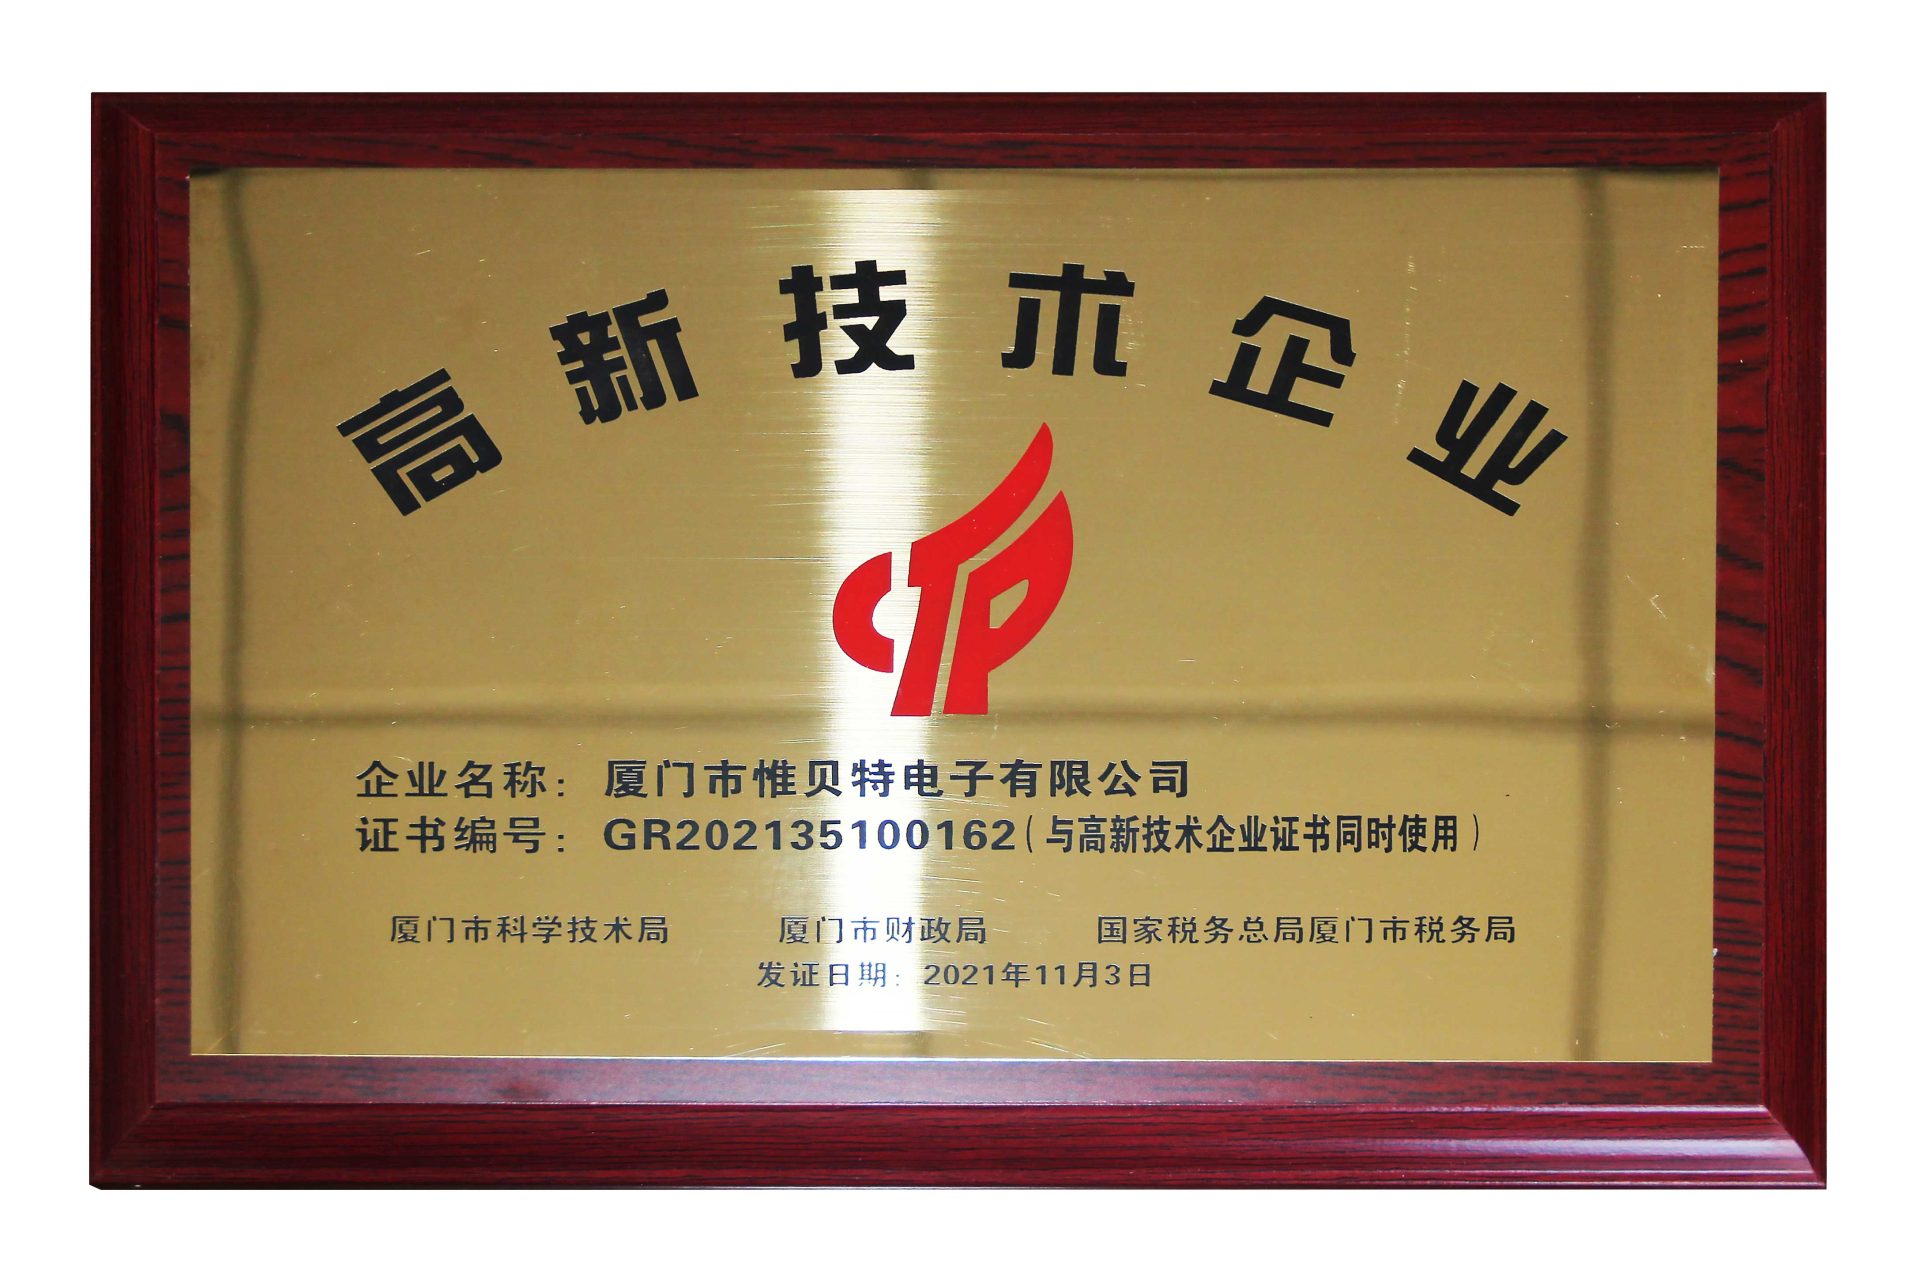 VBeT was awarded “National High-tech Enterprises”